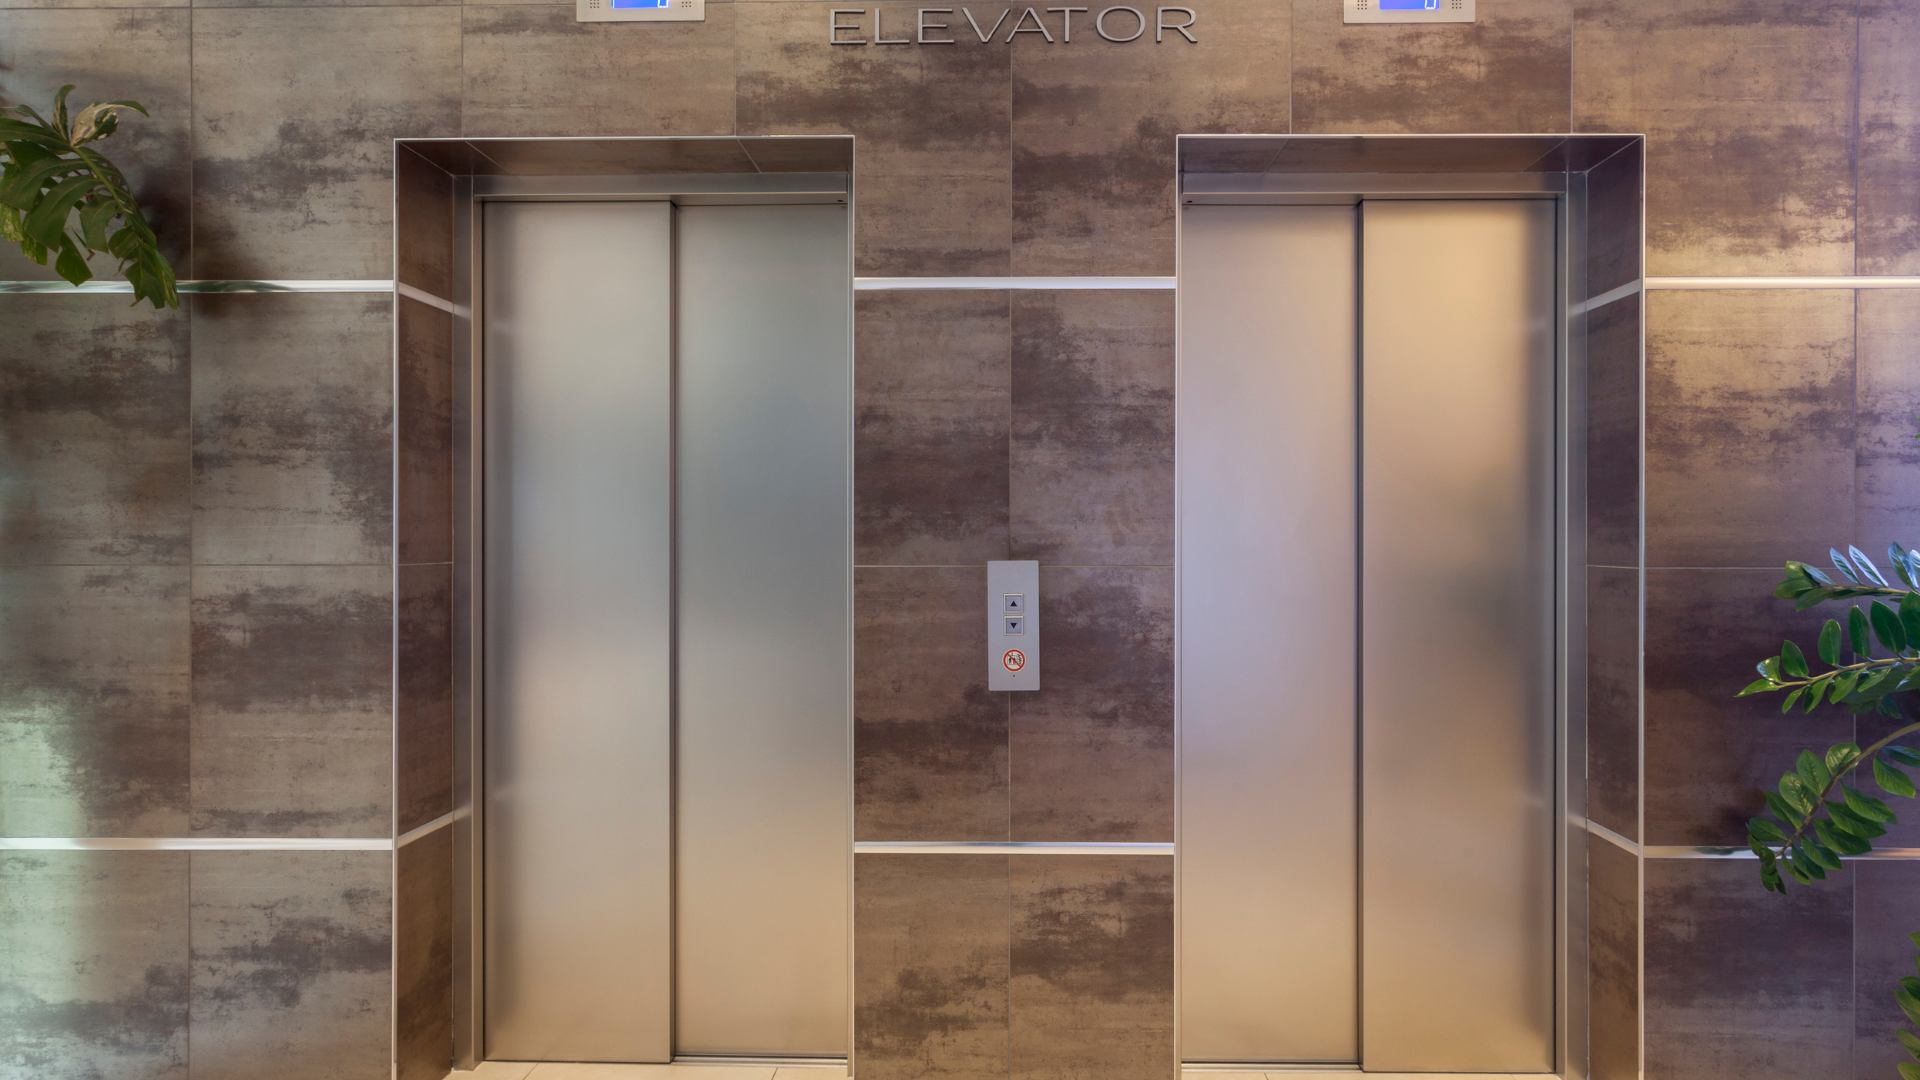 elevator maintenance companies